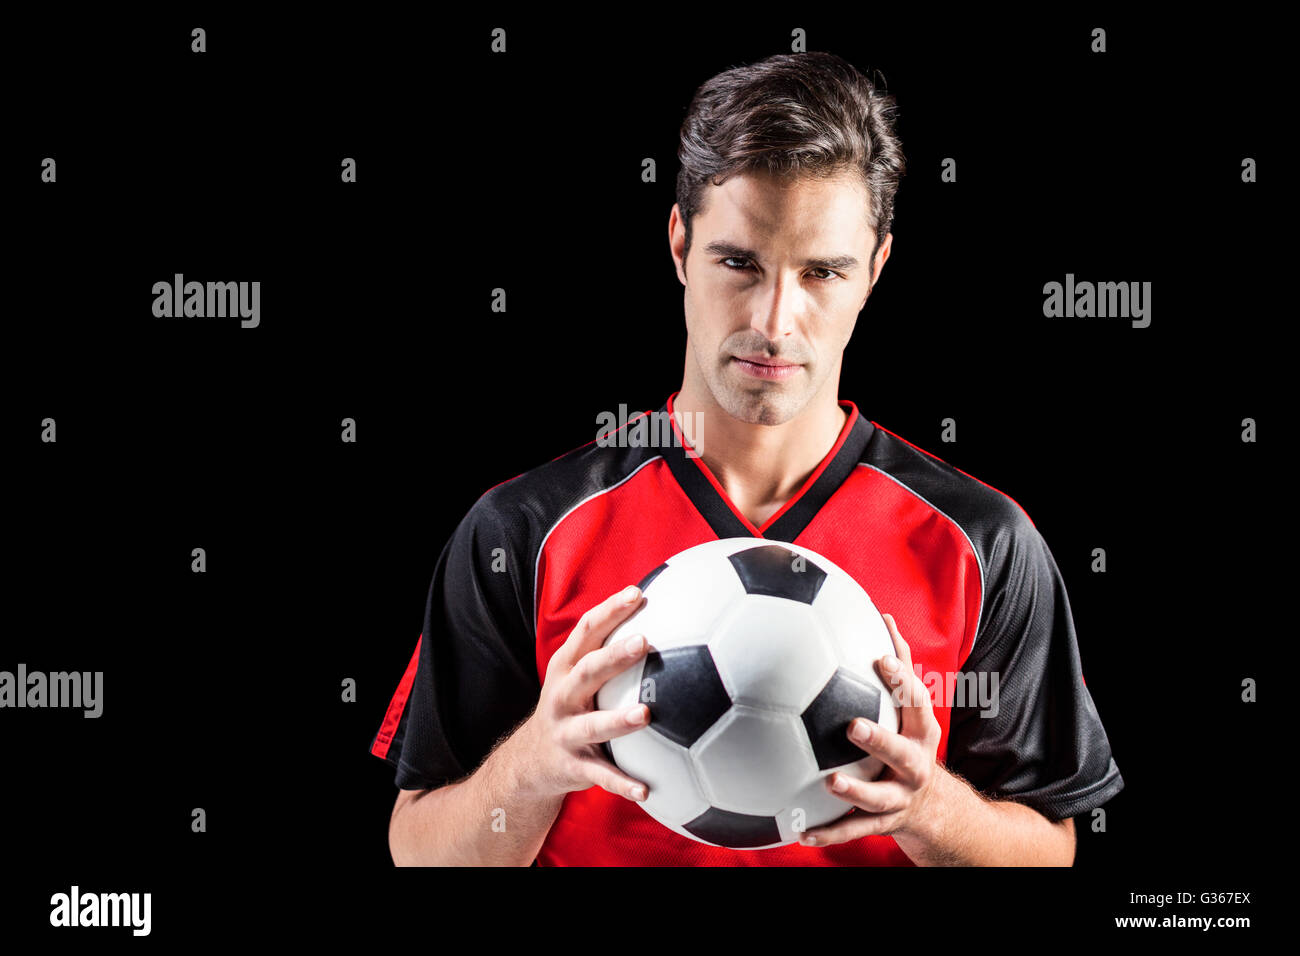 Portrait of confident male athlete holding football Stock Photo